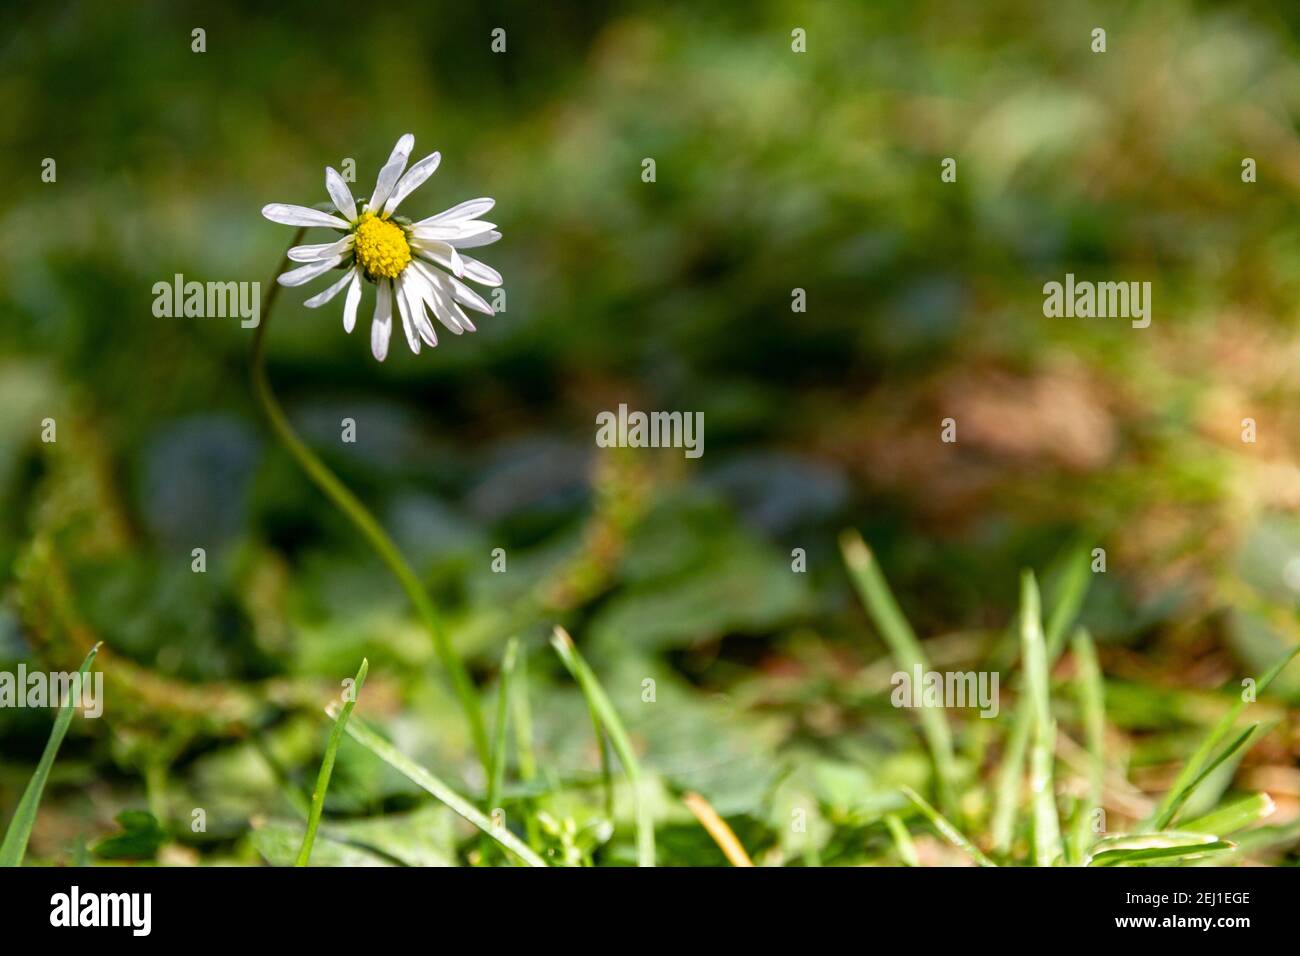 White daisy on a green field Stock Photo